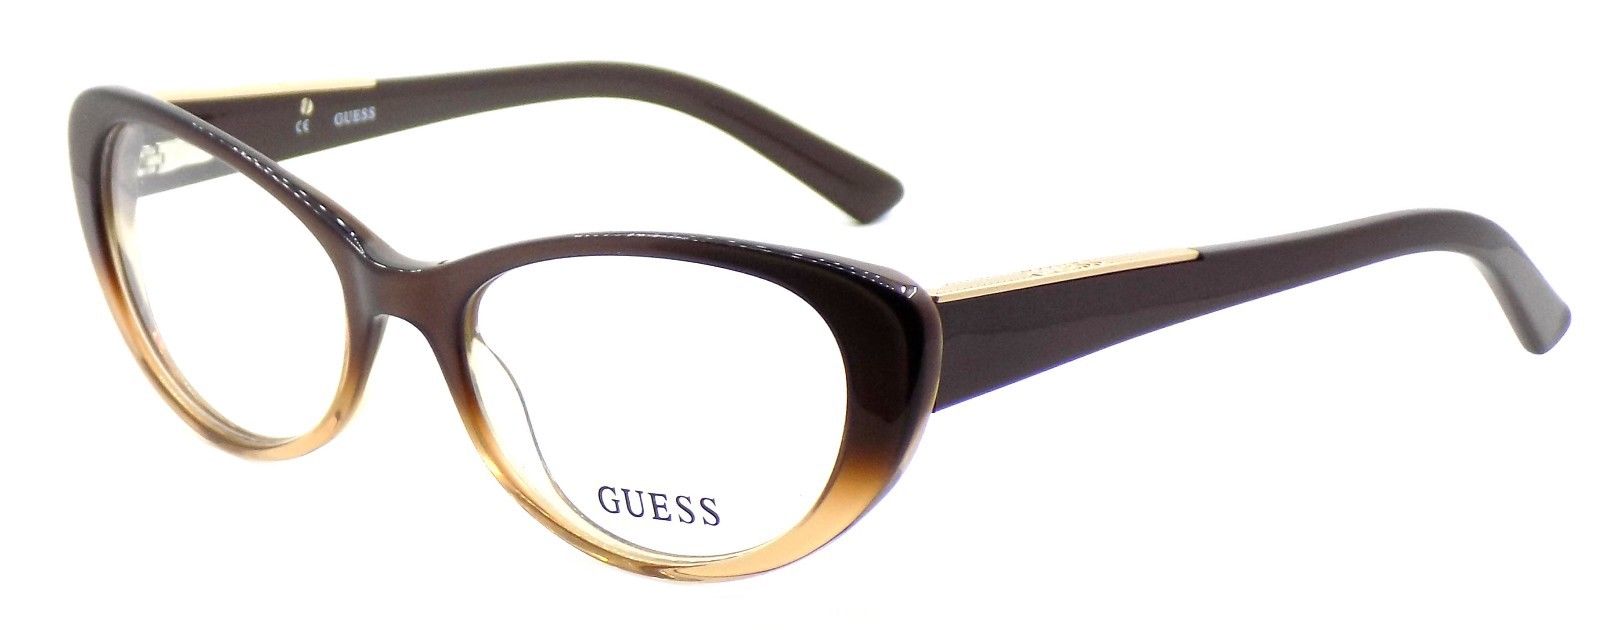 1-GUESS GU2384 BRN Women's Plastic Eyeglasses Frames 51-17-135 Brown + CASE-715583765955-IKSpecs